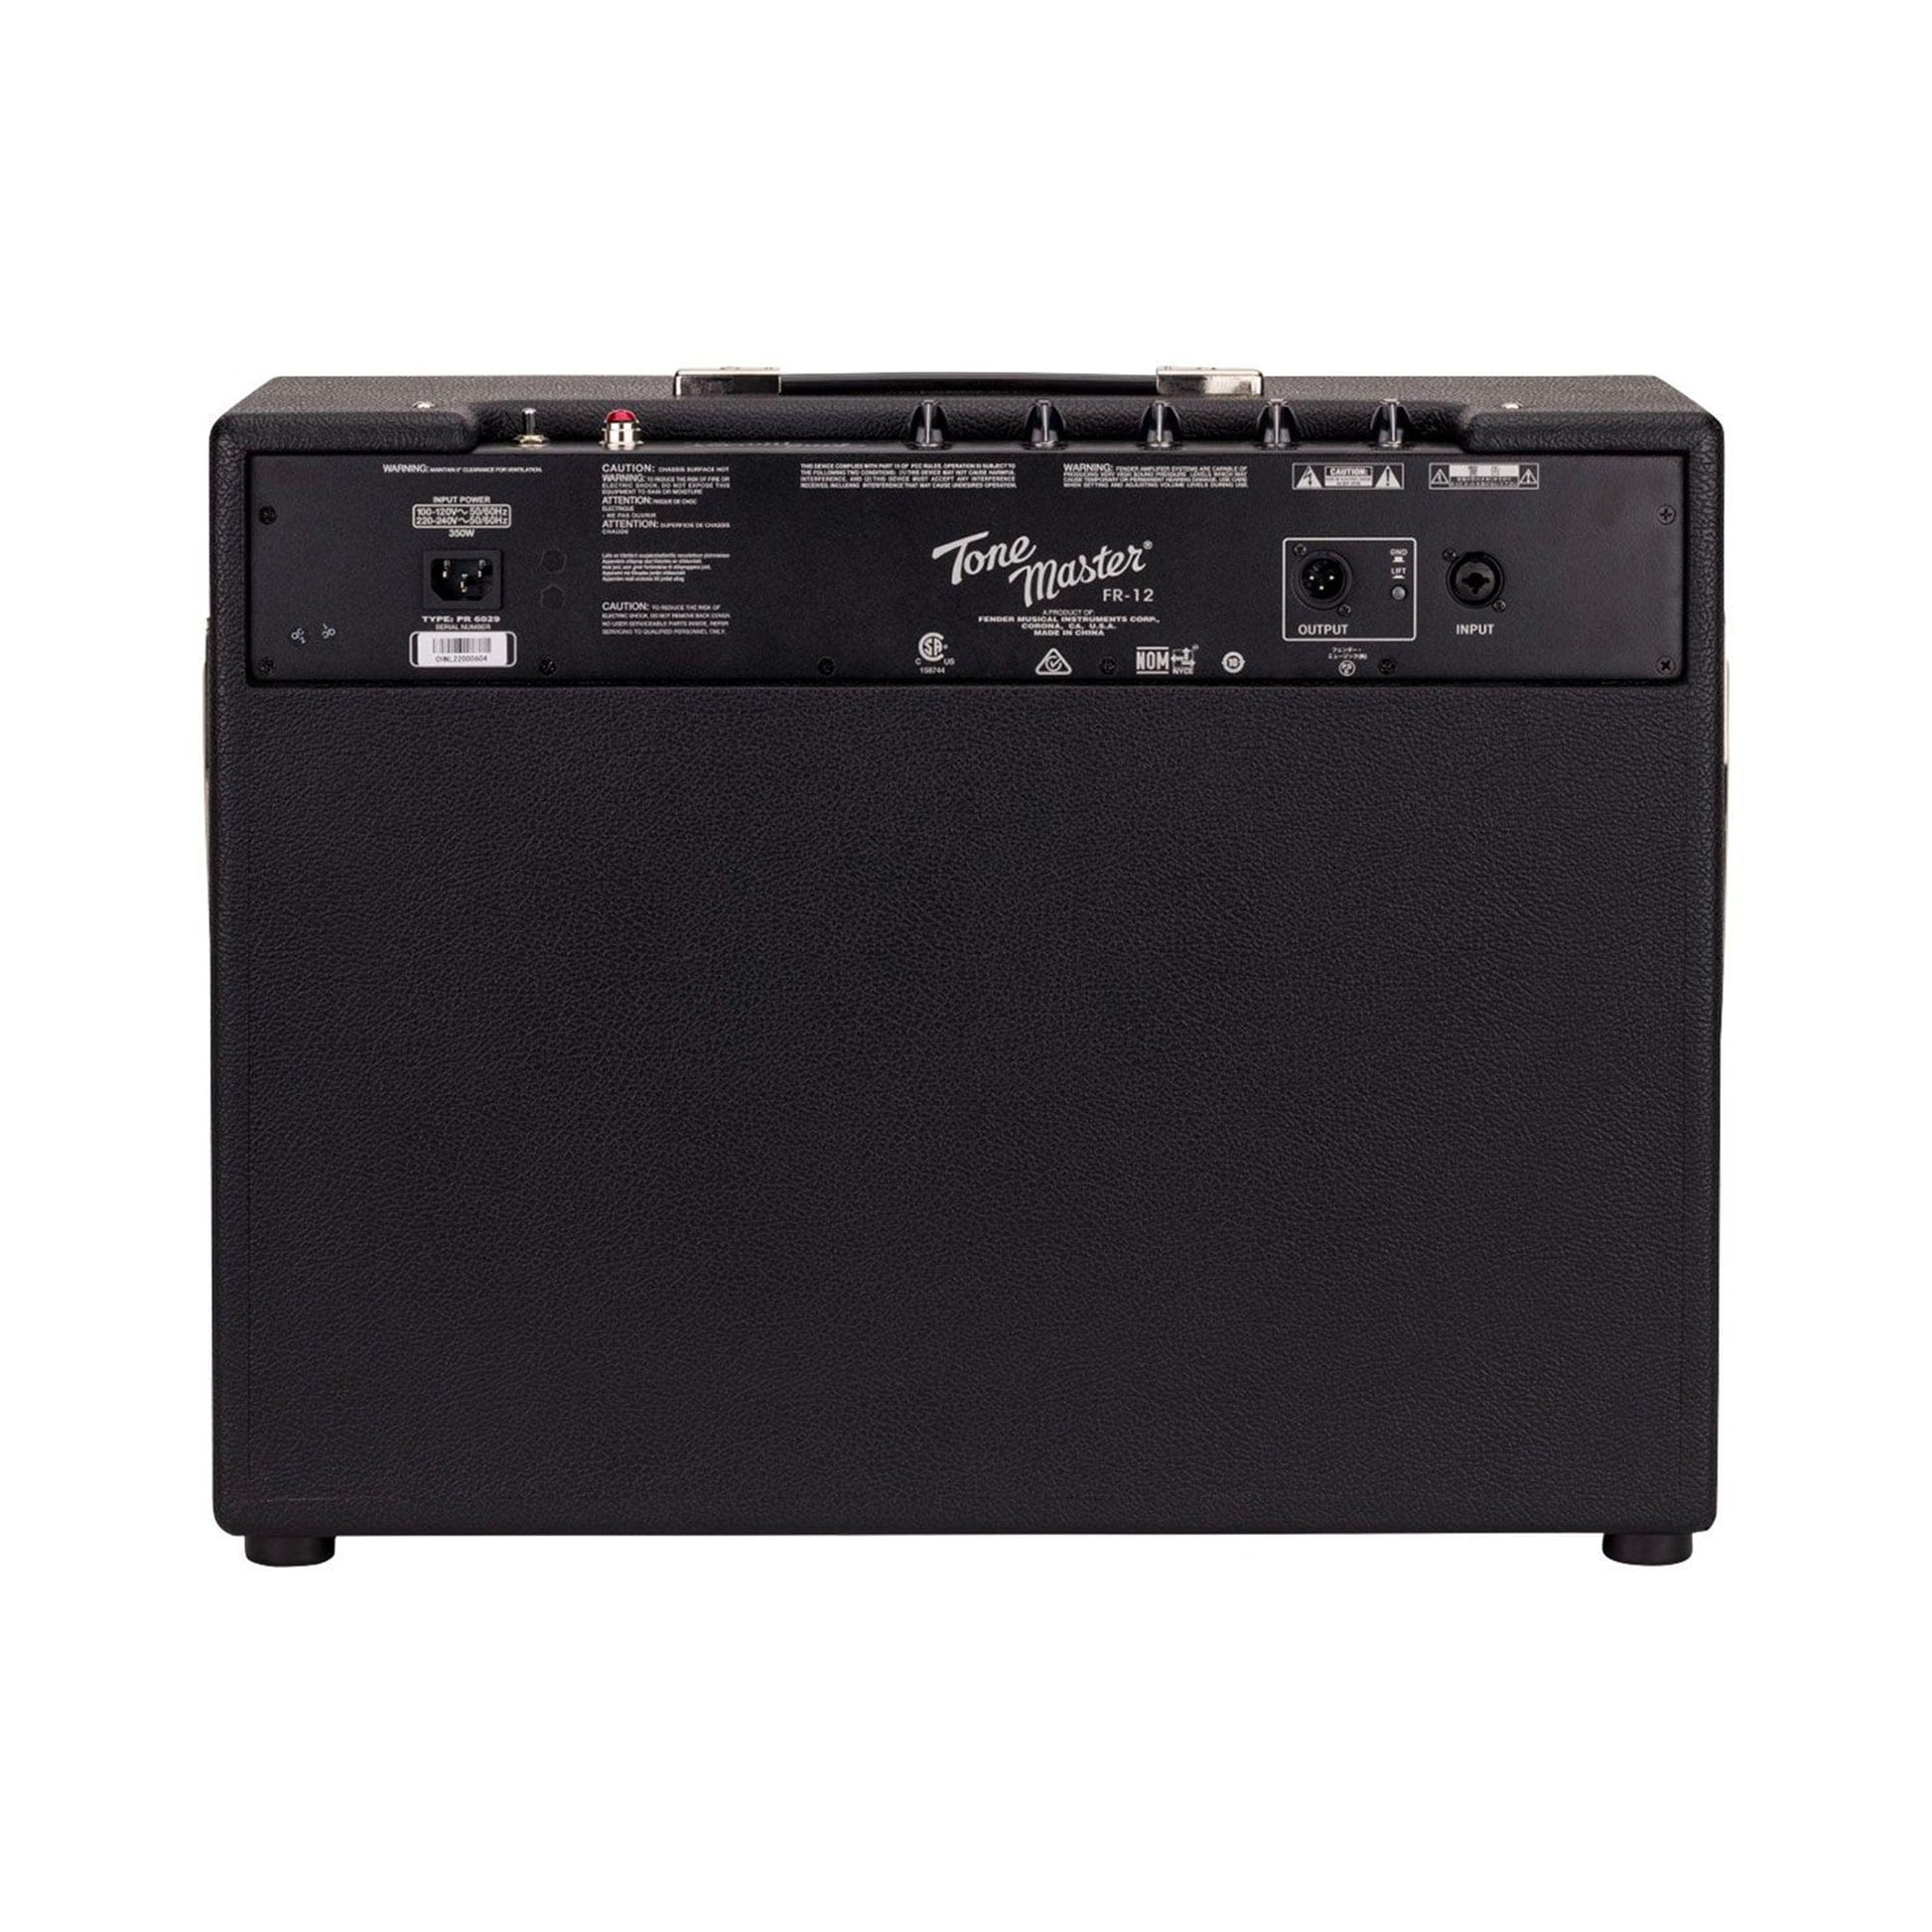 Fender Tone Master FR-12 1x12 Powered Speaker Cabinet Amps / Guitar Combos